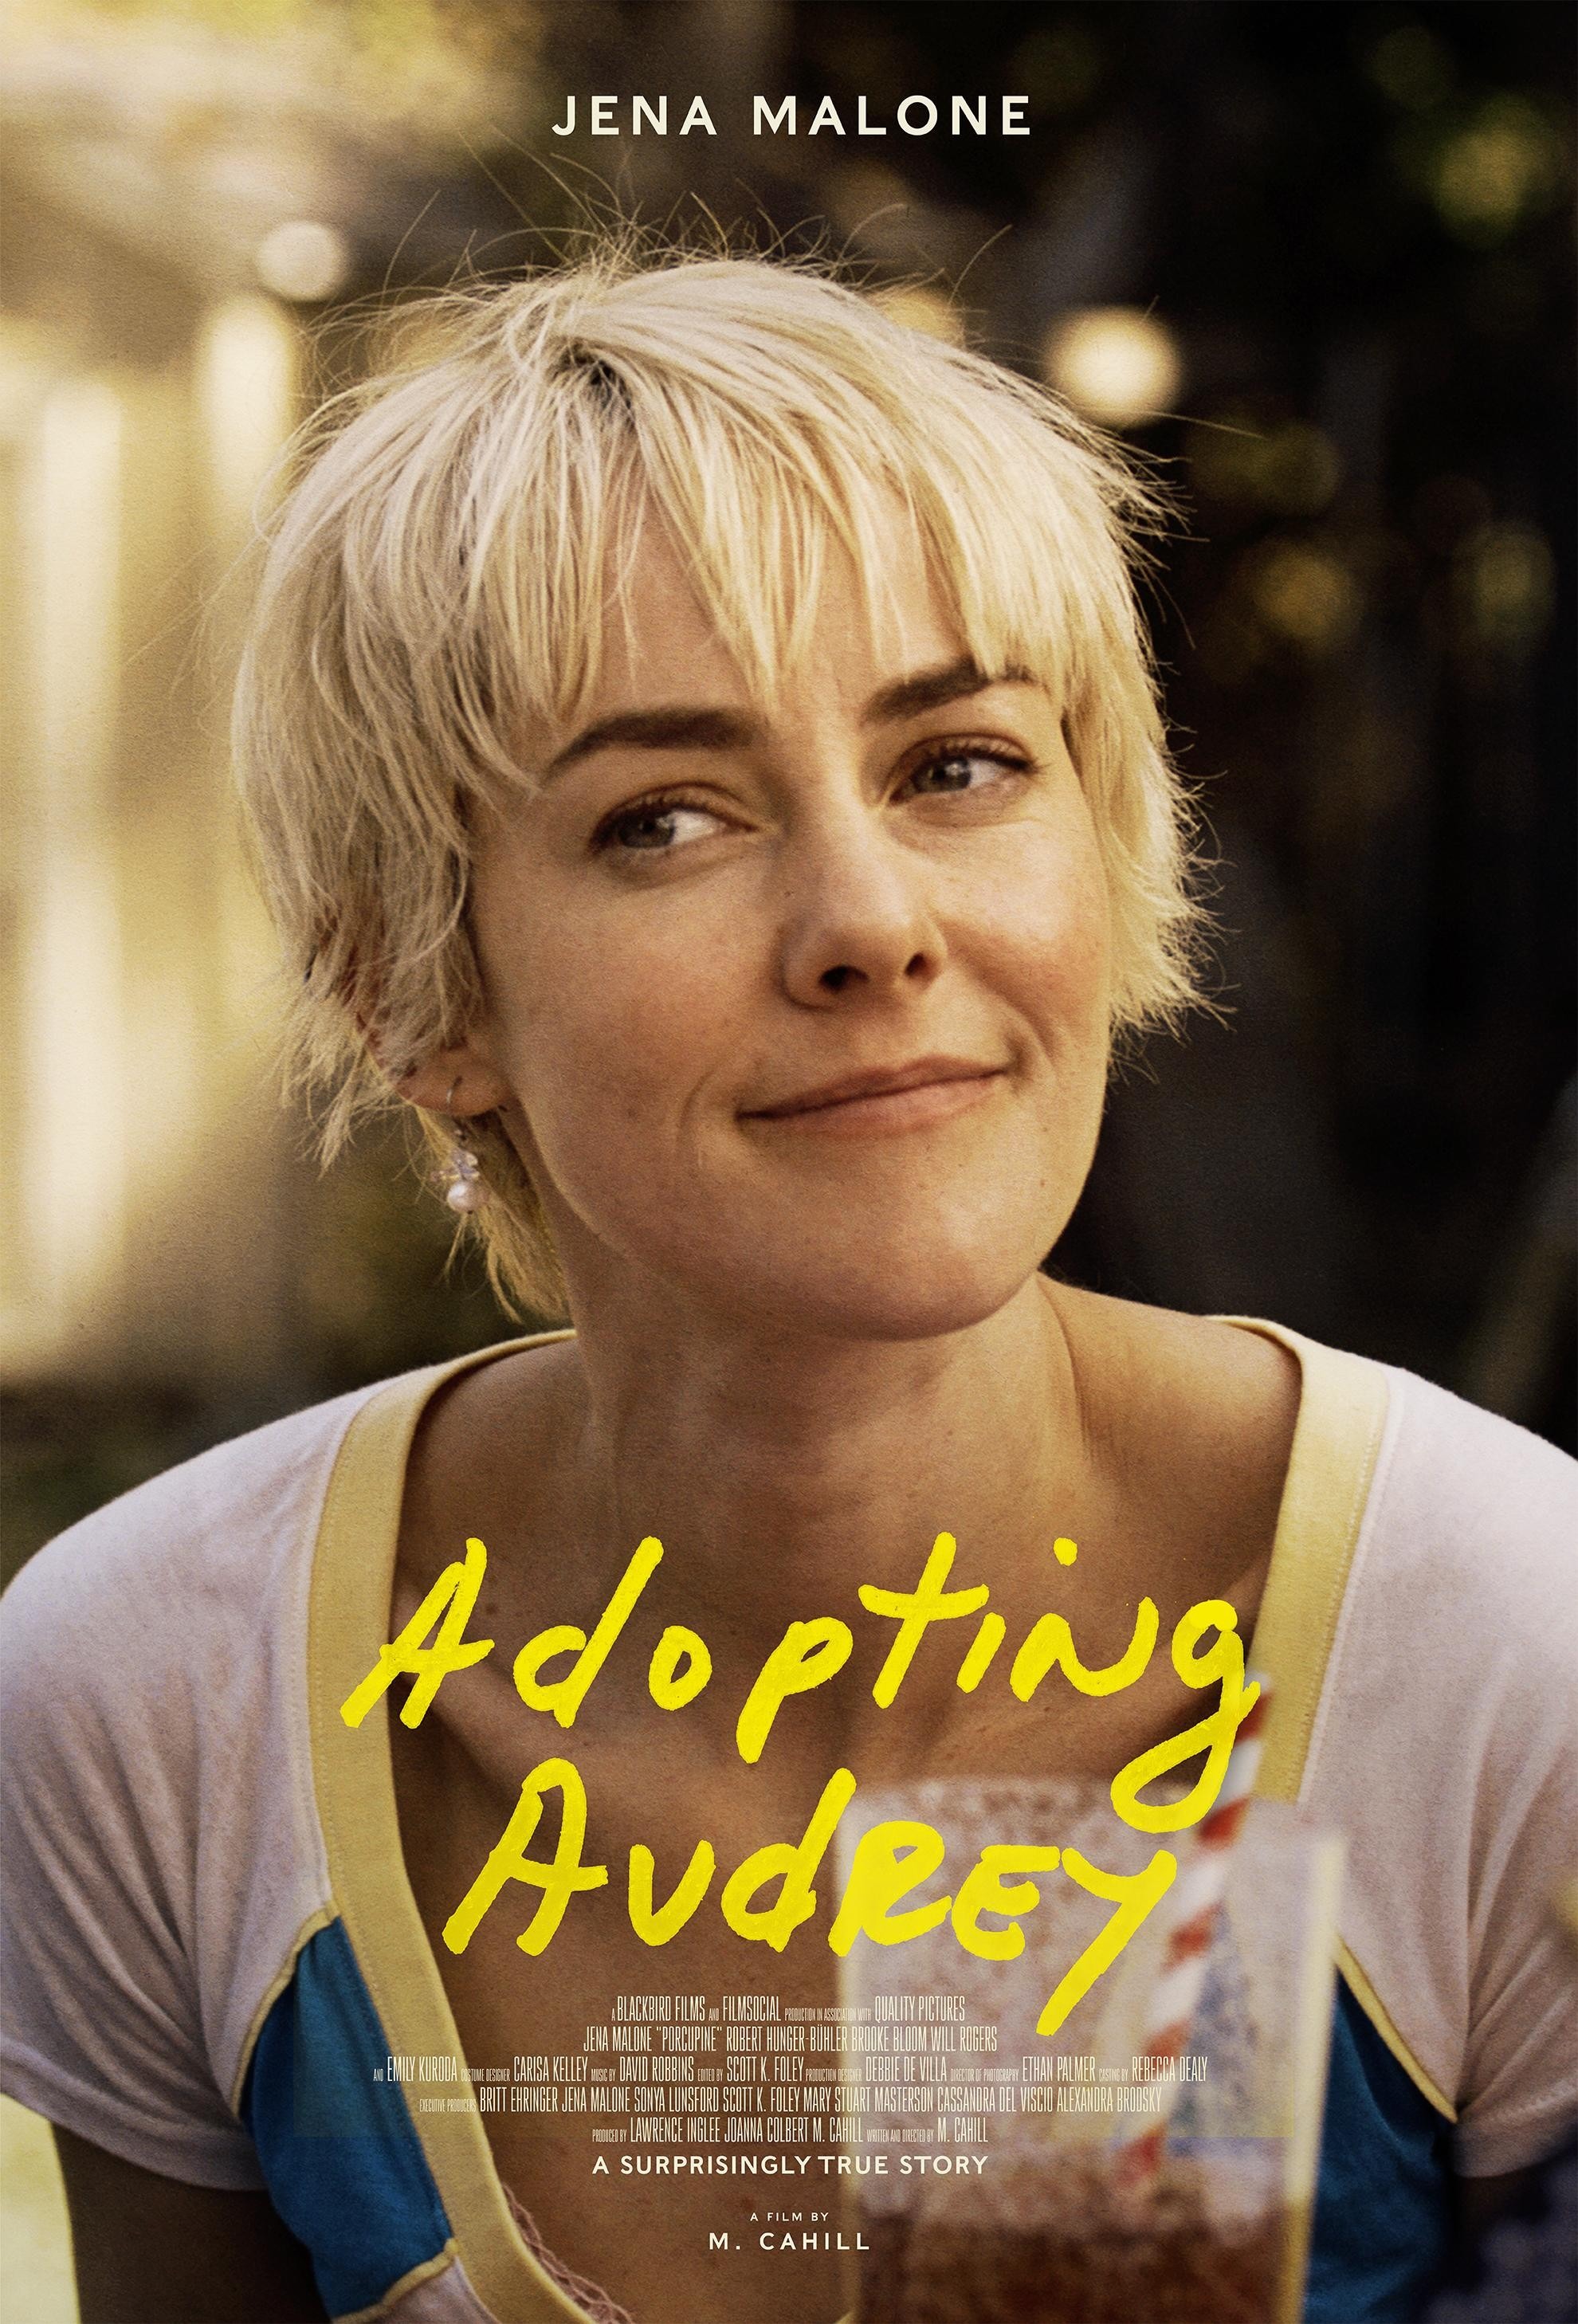 Mega Sized Movie Poster Image for Adopting Audrey 